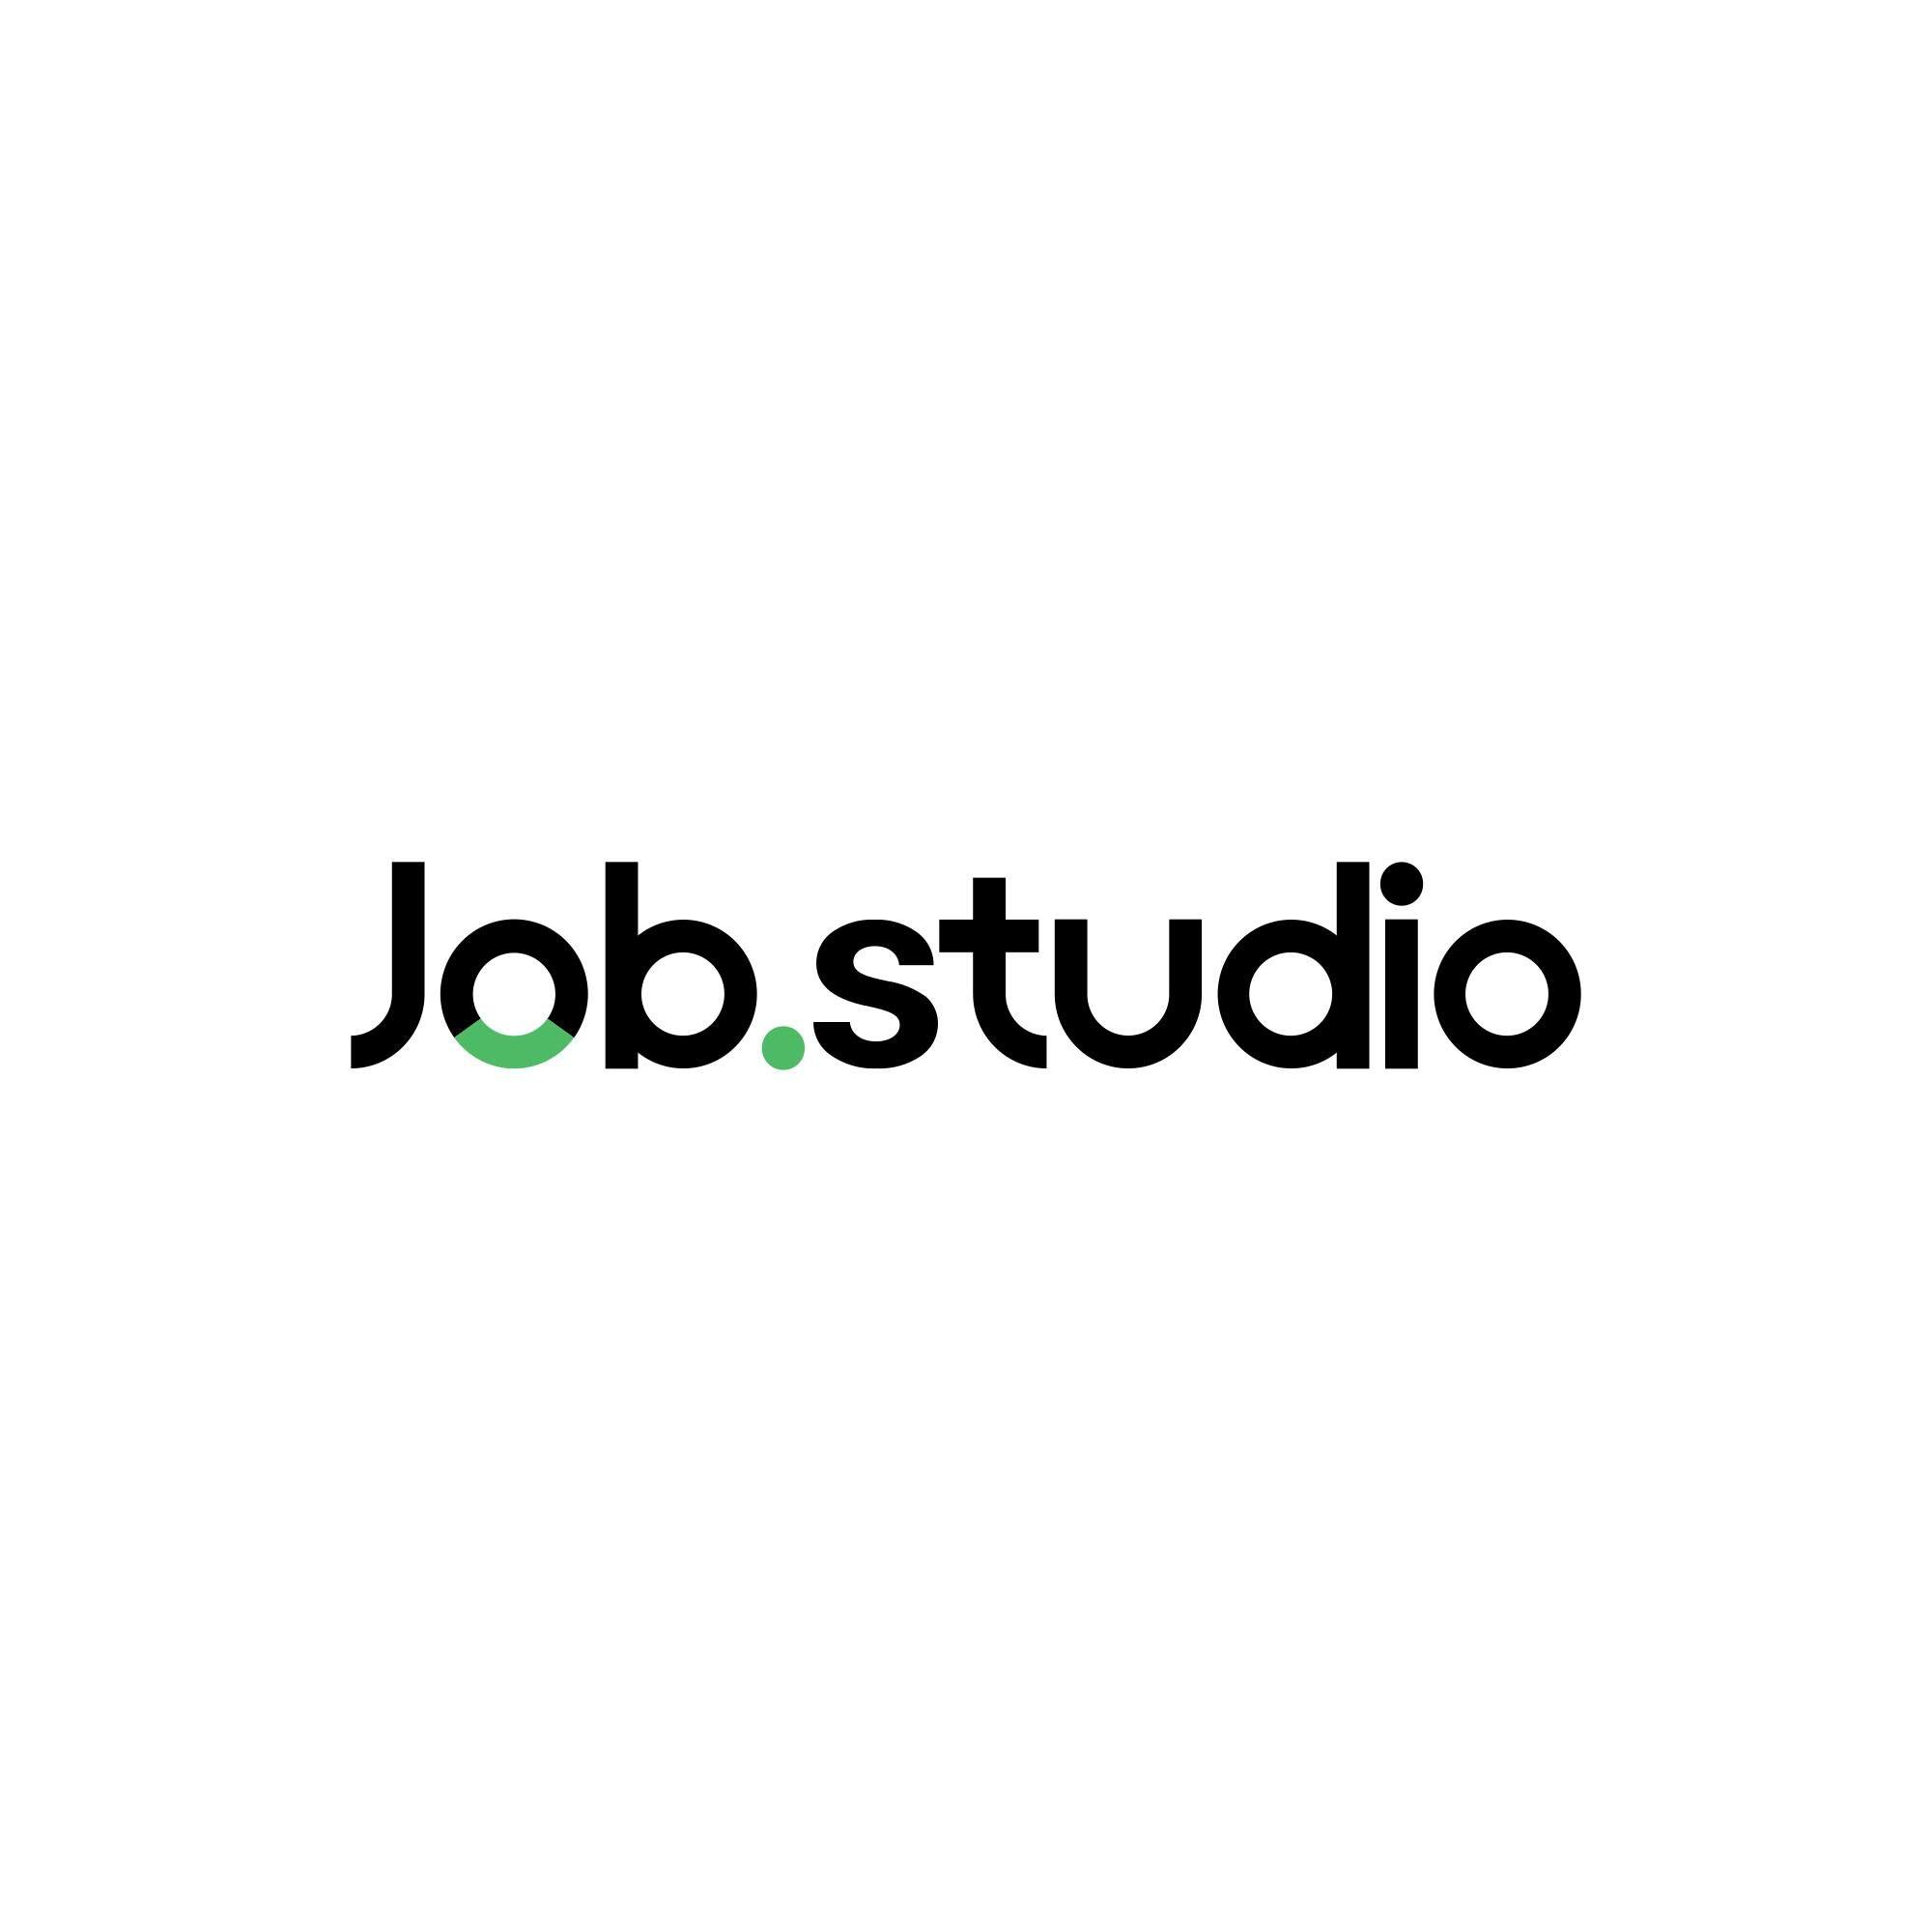 Job Studio: The Future of Job Hunting? A UX Analysis